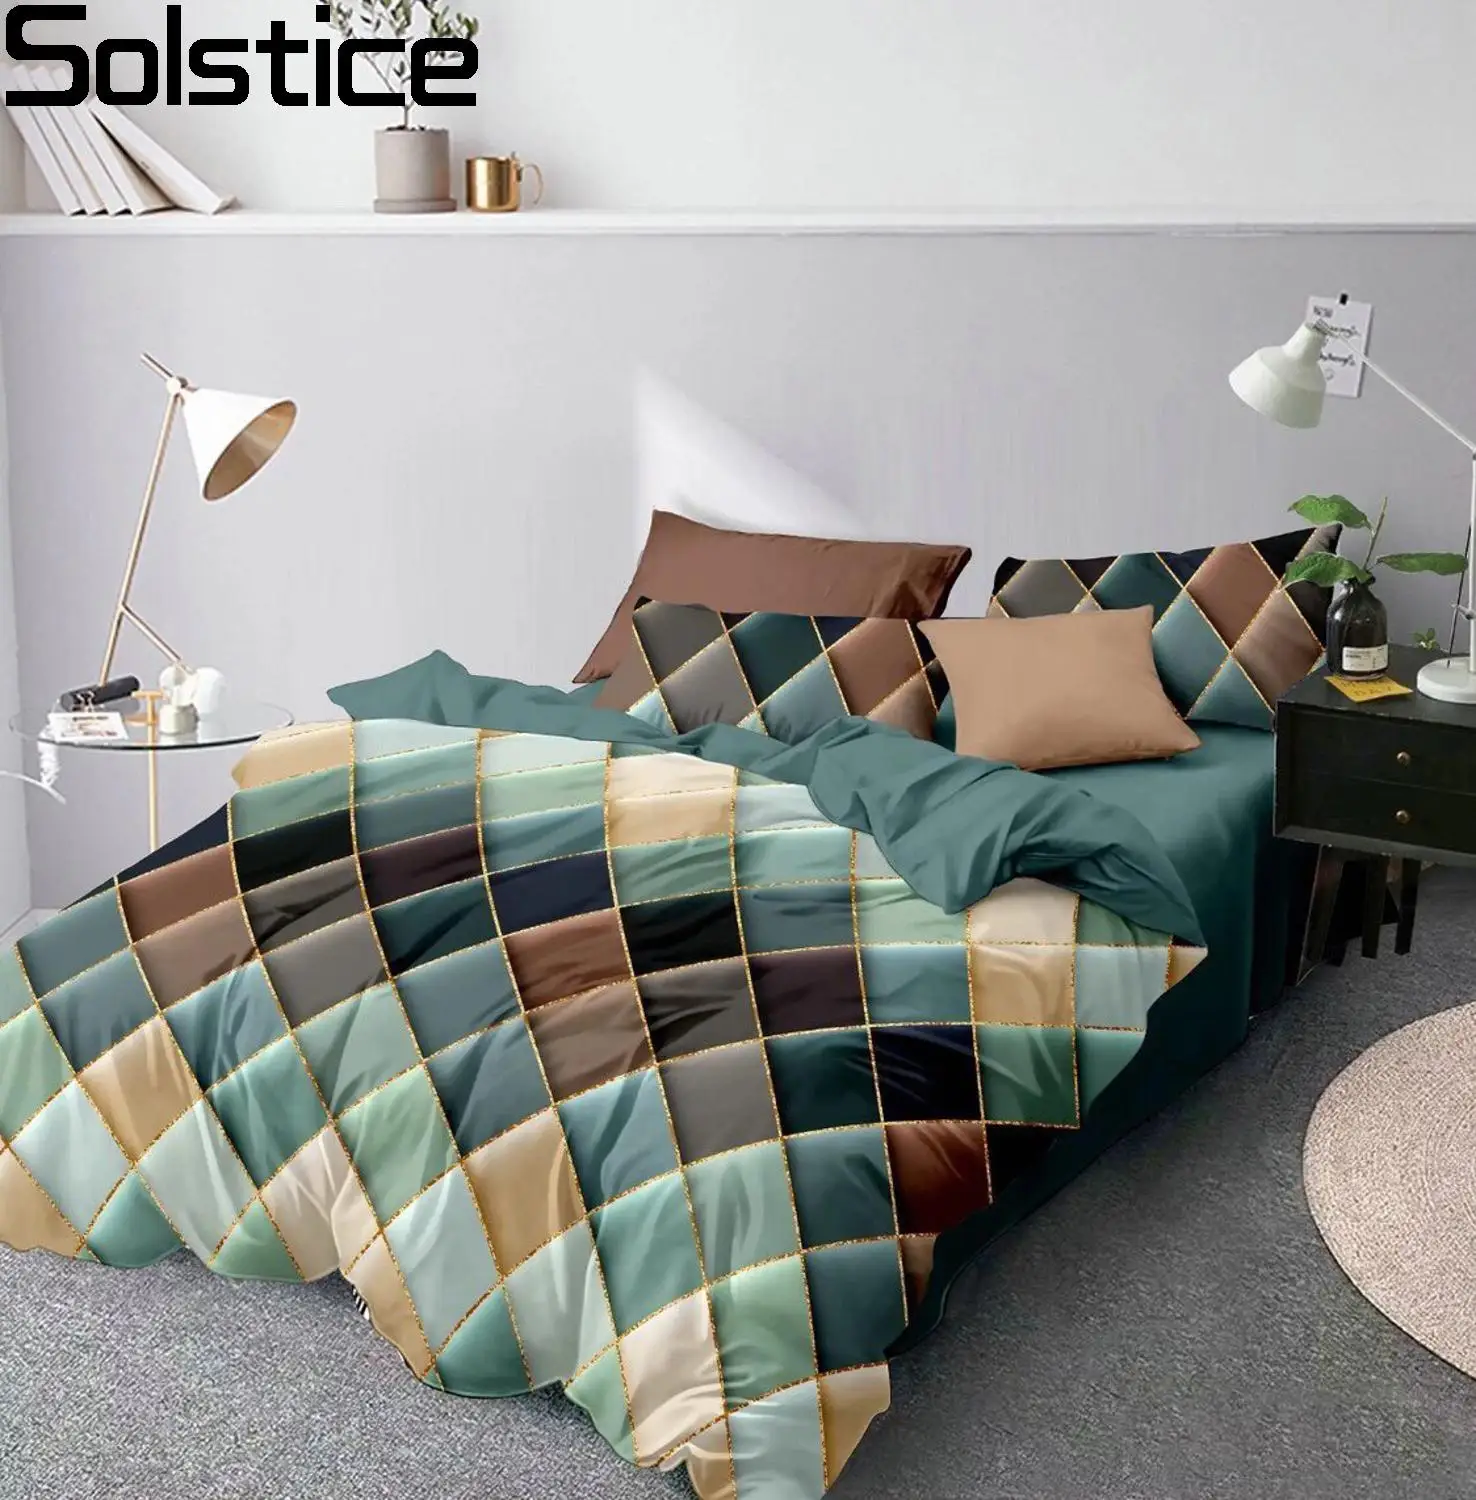 

Solstice 3D Green Luxurious Quilt Cover Bedding Set Geometric Rhombus Lattice Bed Linens Duvet Cover Pillowcase Comforter Sets